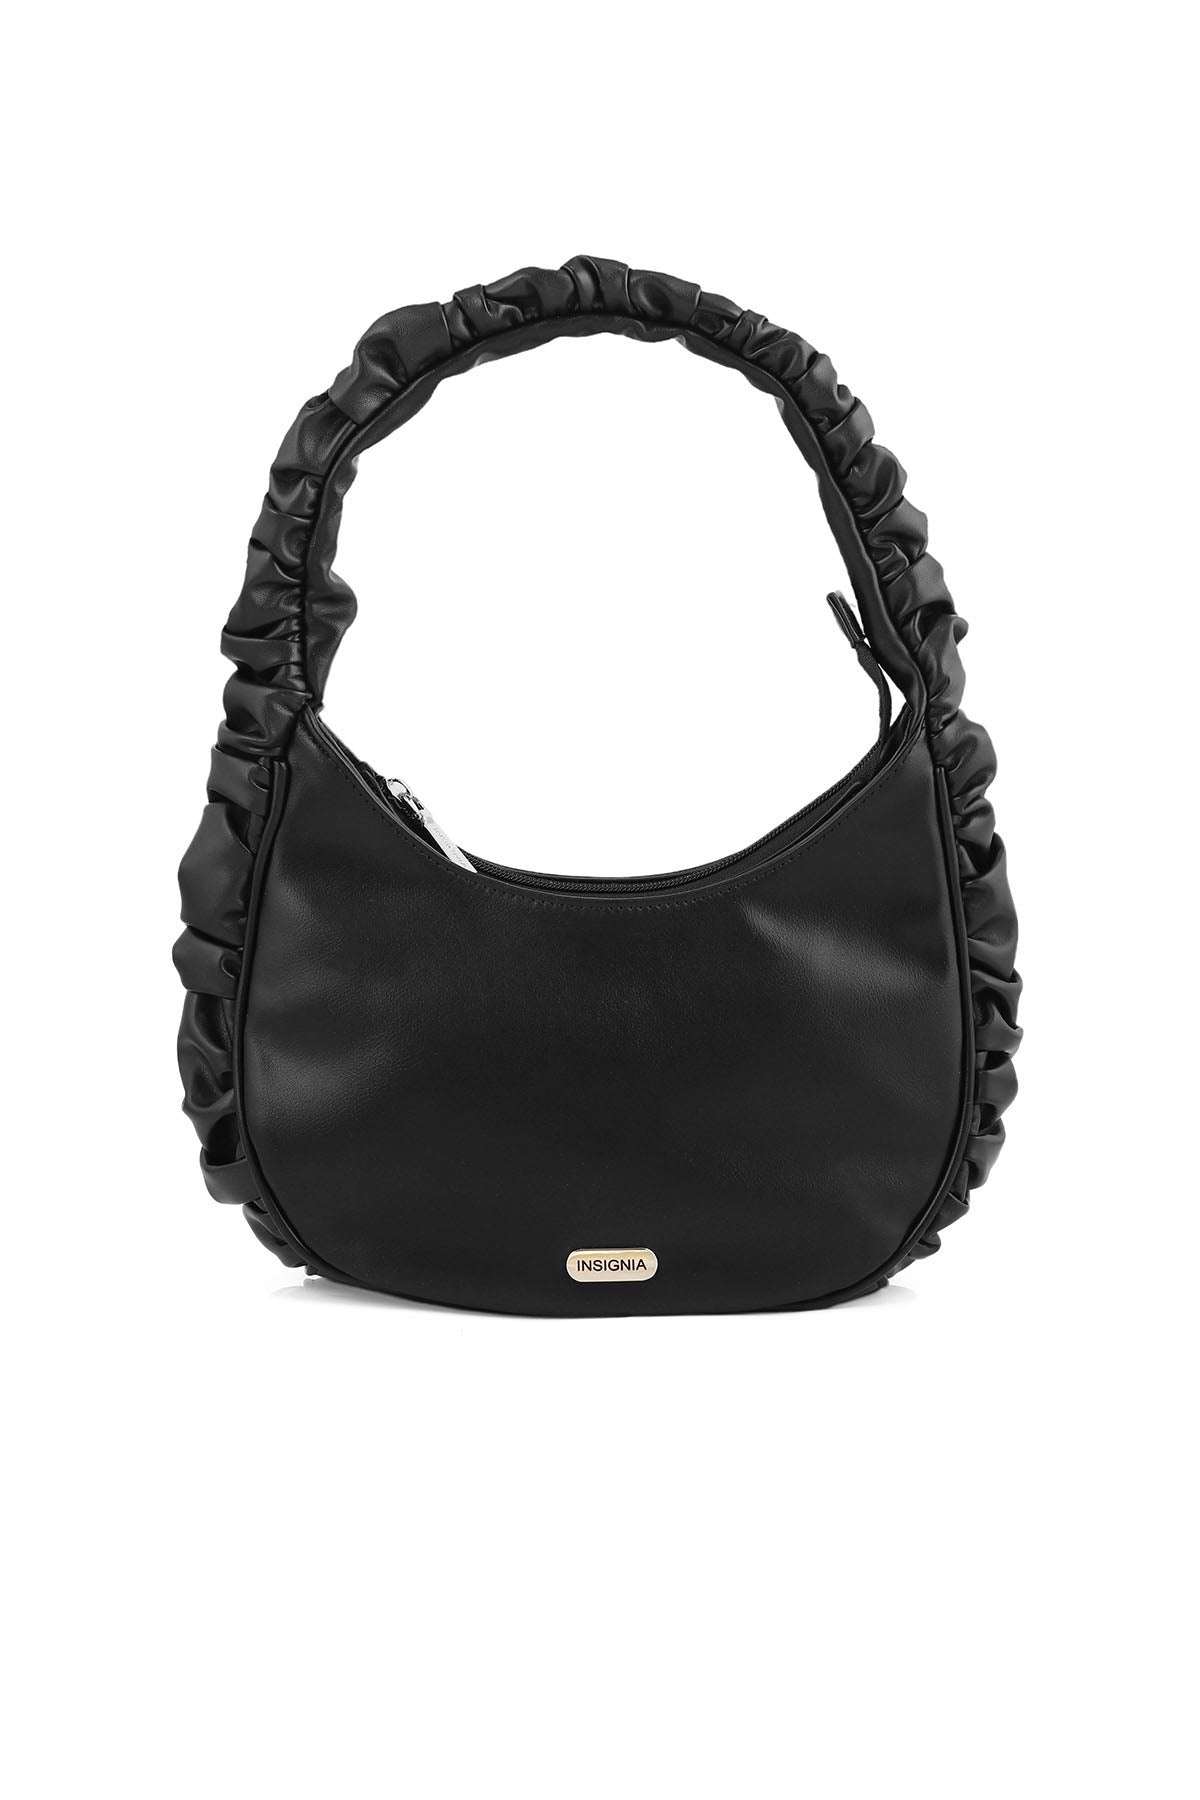 Hobo Hand Bags B15009-Black